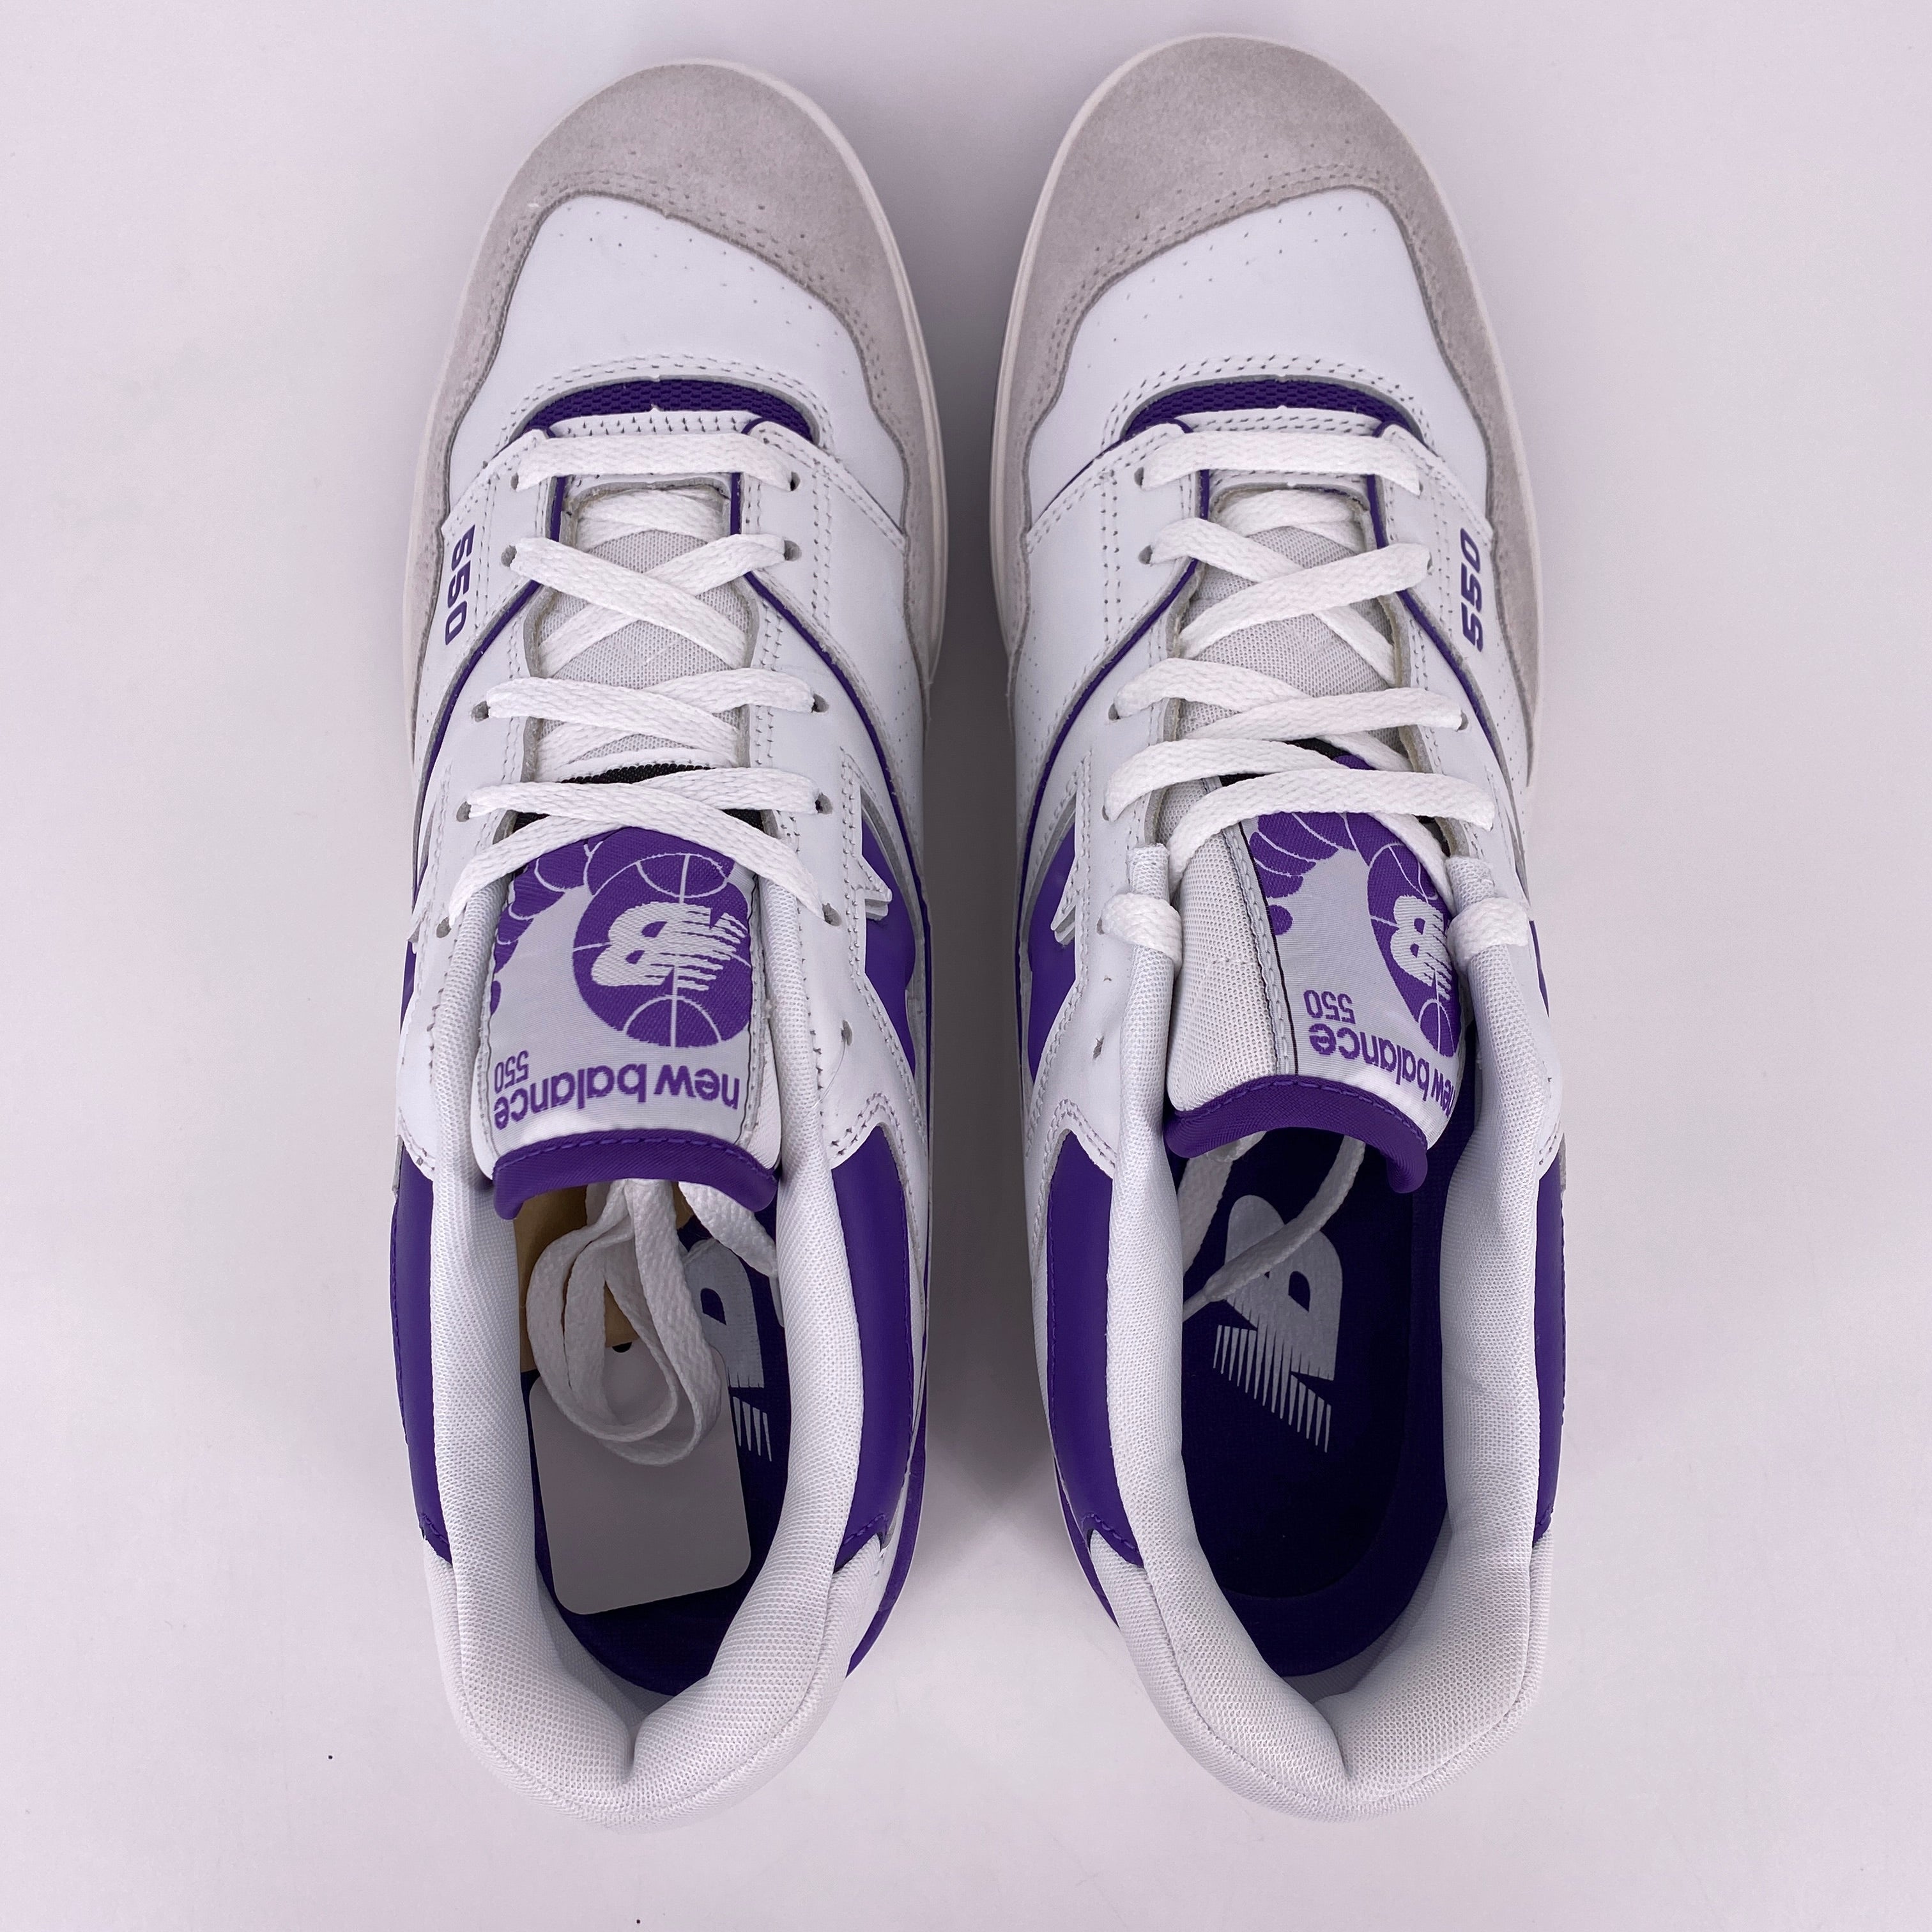 New Balance 550 "White Purple" 2021 New (Cond) Size 13